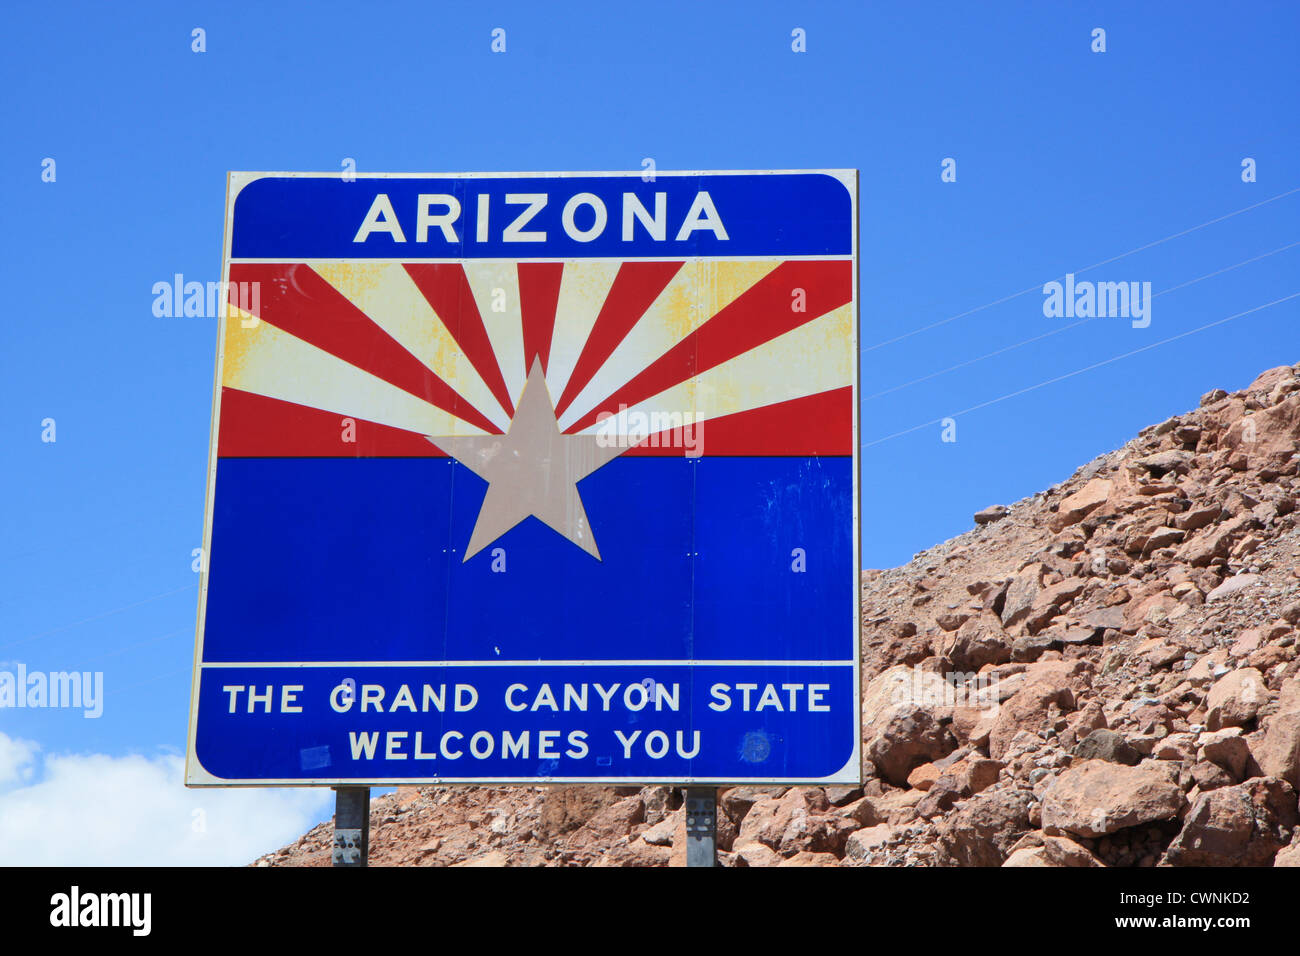 Welcome to Arizona state sign, Arizona, USA Stock Photo